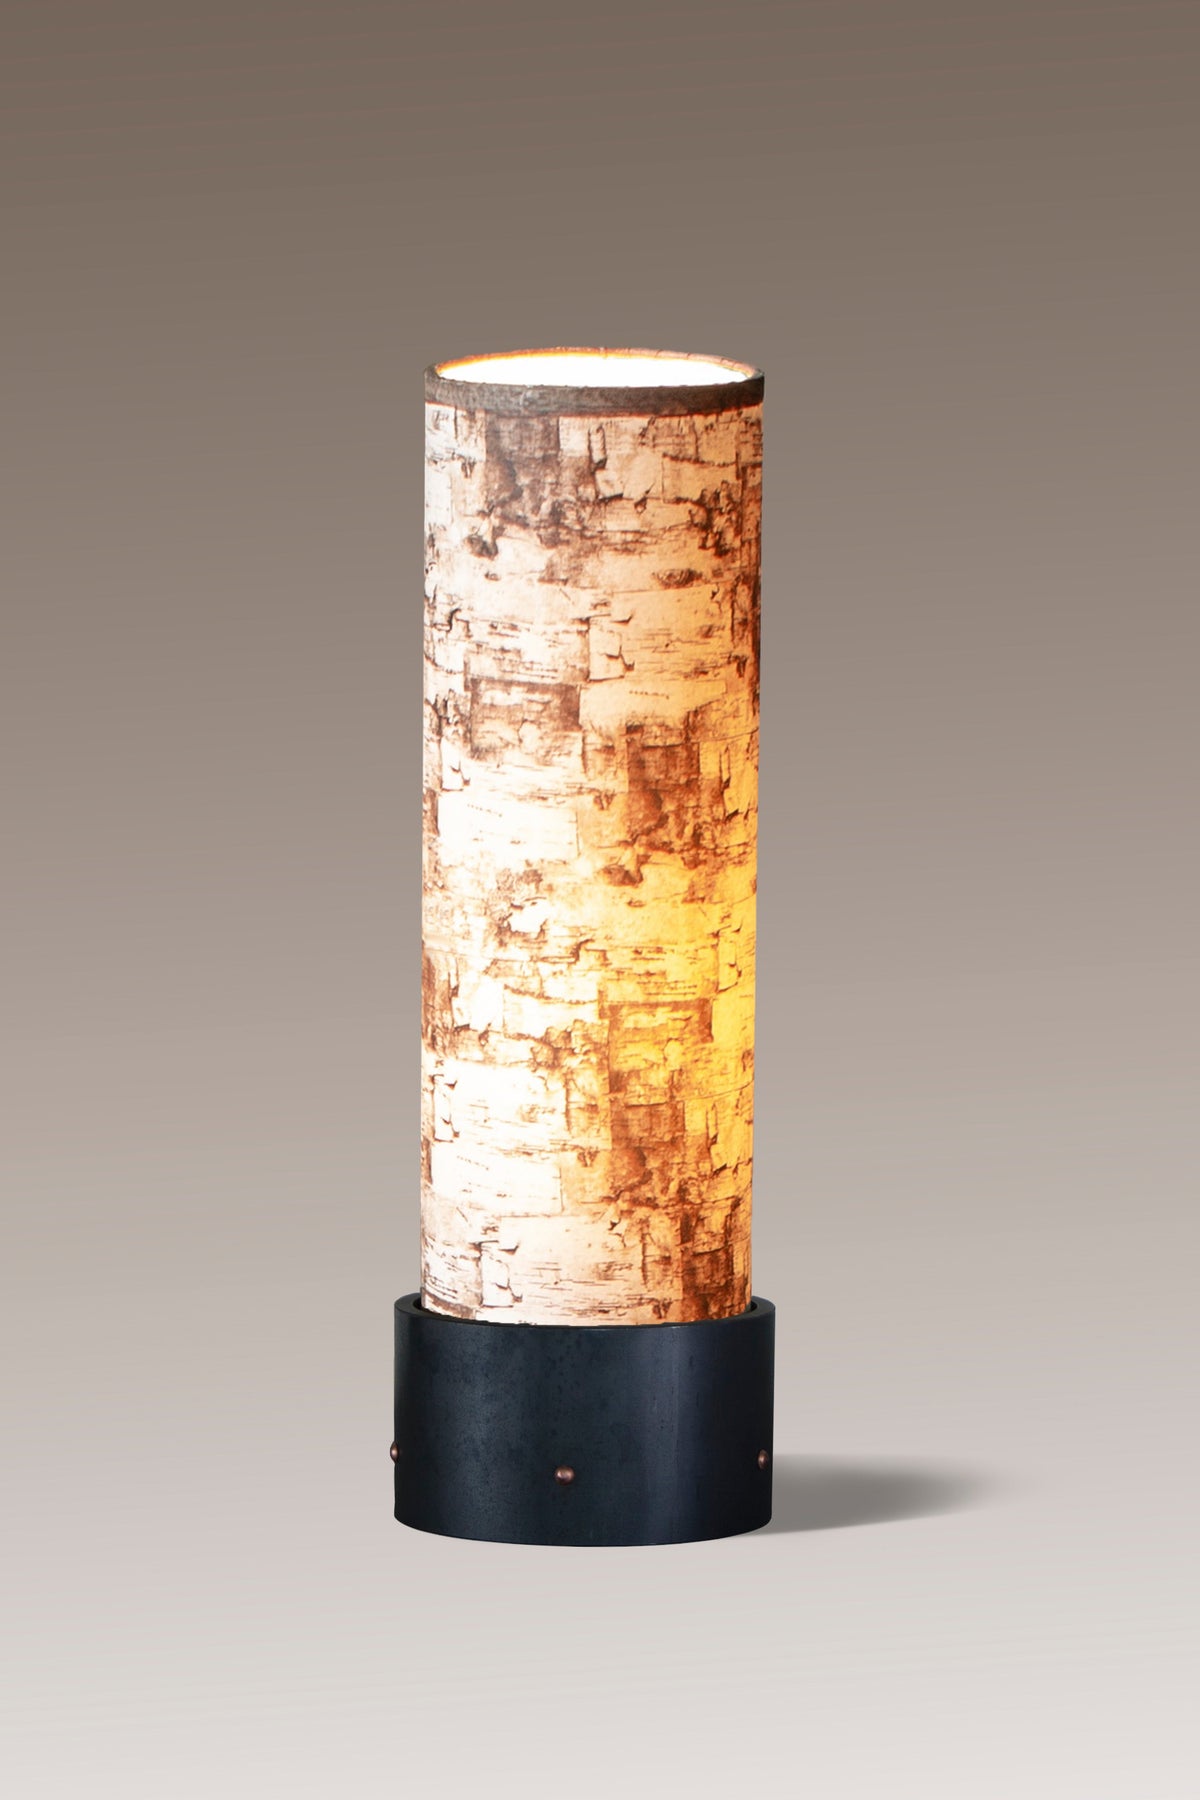 Janna Ugone &amp; Co Luminaires Steel Luminaire Accent Lamp with Birch Bark Shade